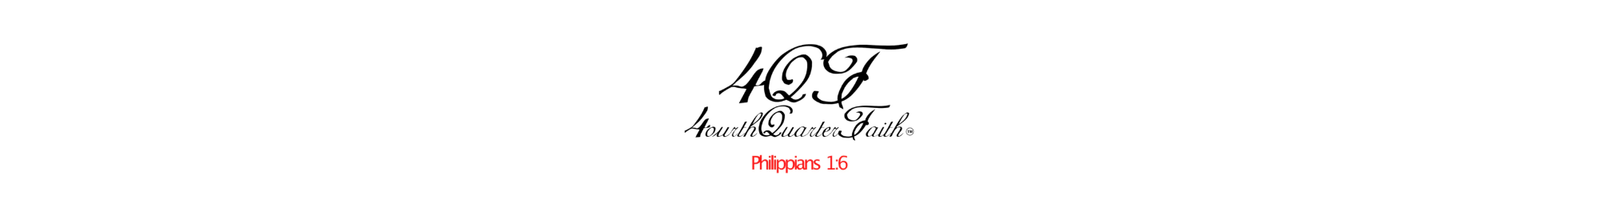 Fourth Quarter Faith